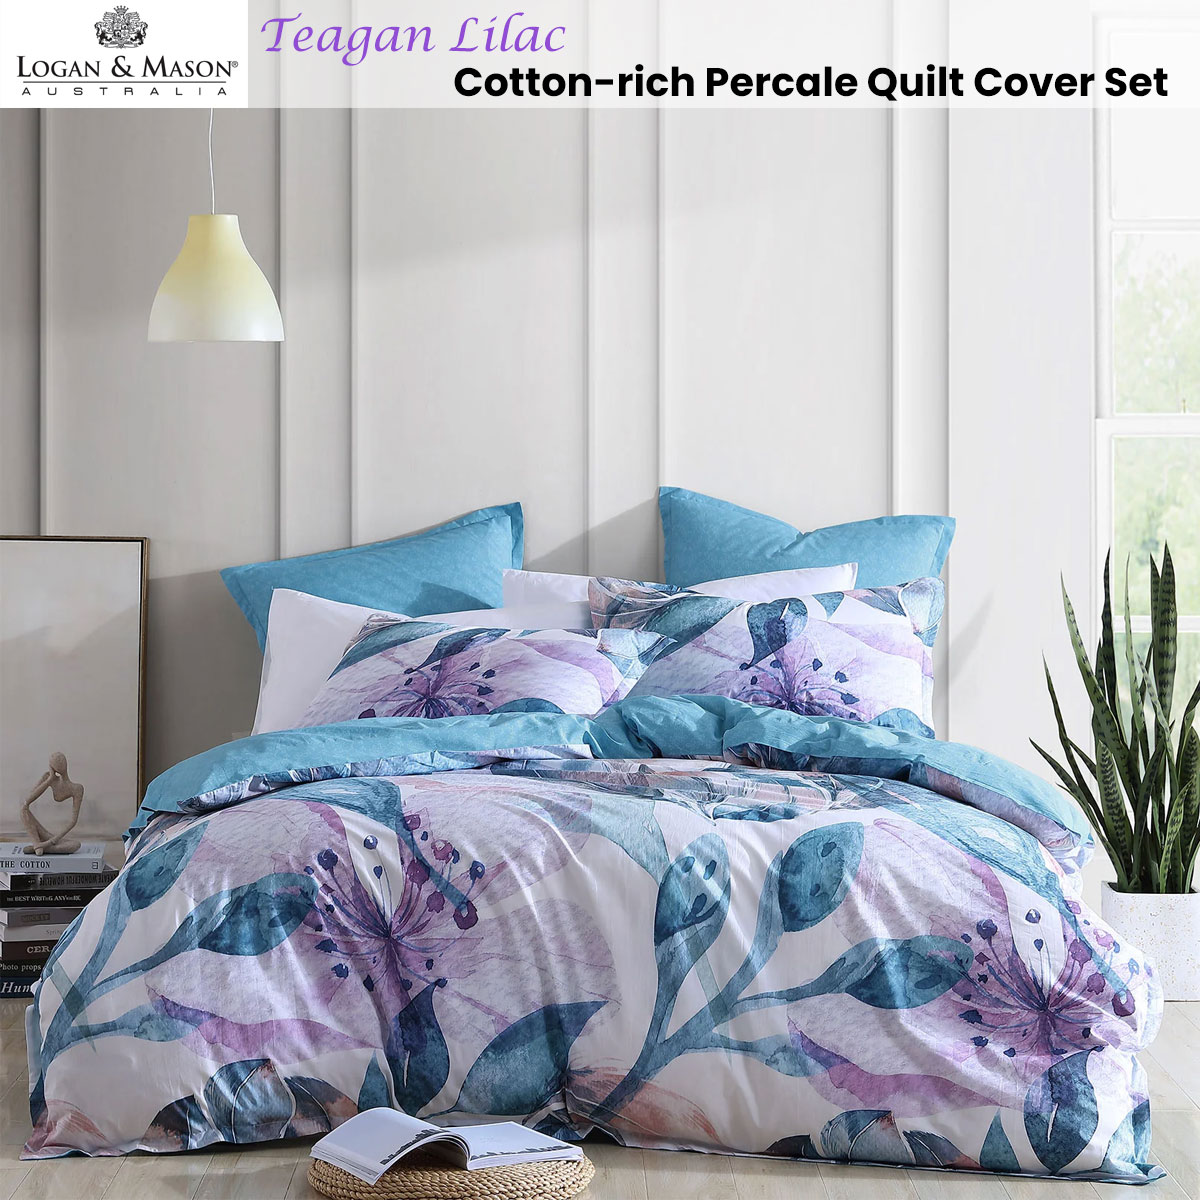 Teagan Lilac Cotton-rich Percale Print Quilt Cover Set by Logan and Mason